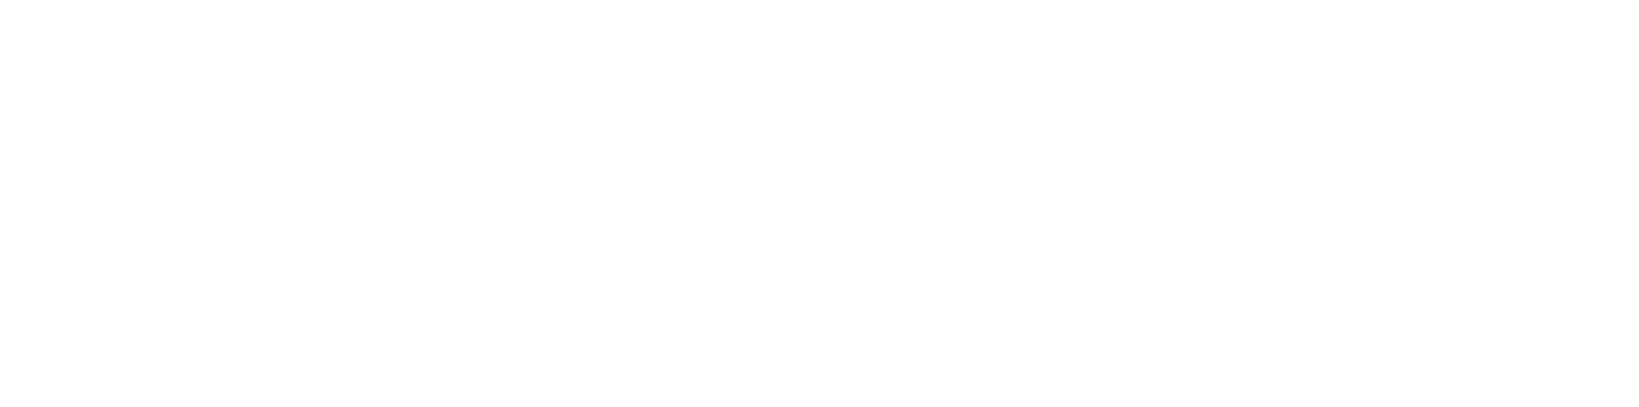 Fluence Energy Logo groß für dunkle Hintergründe (transparentes PNG)